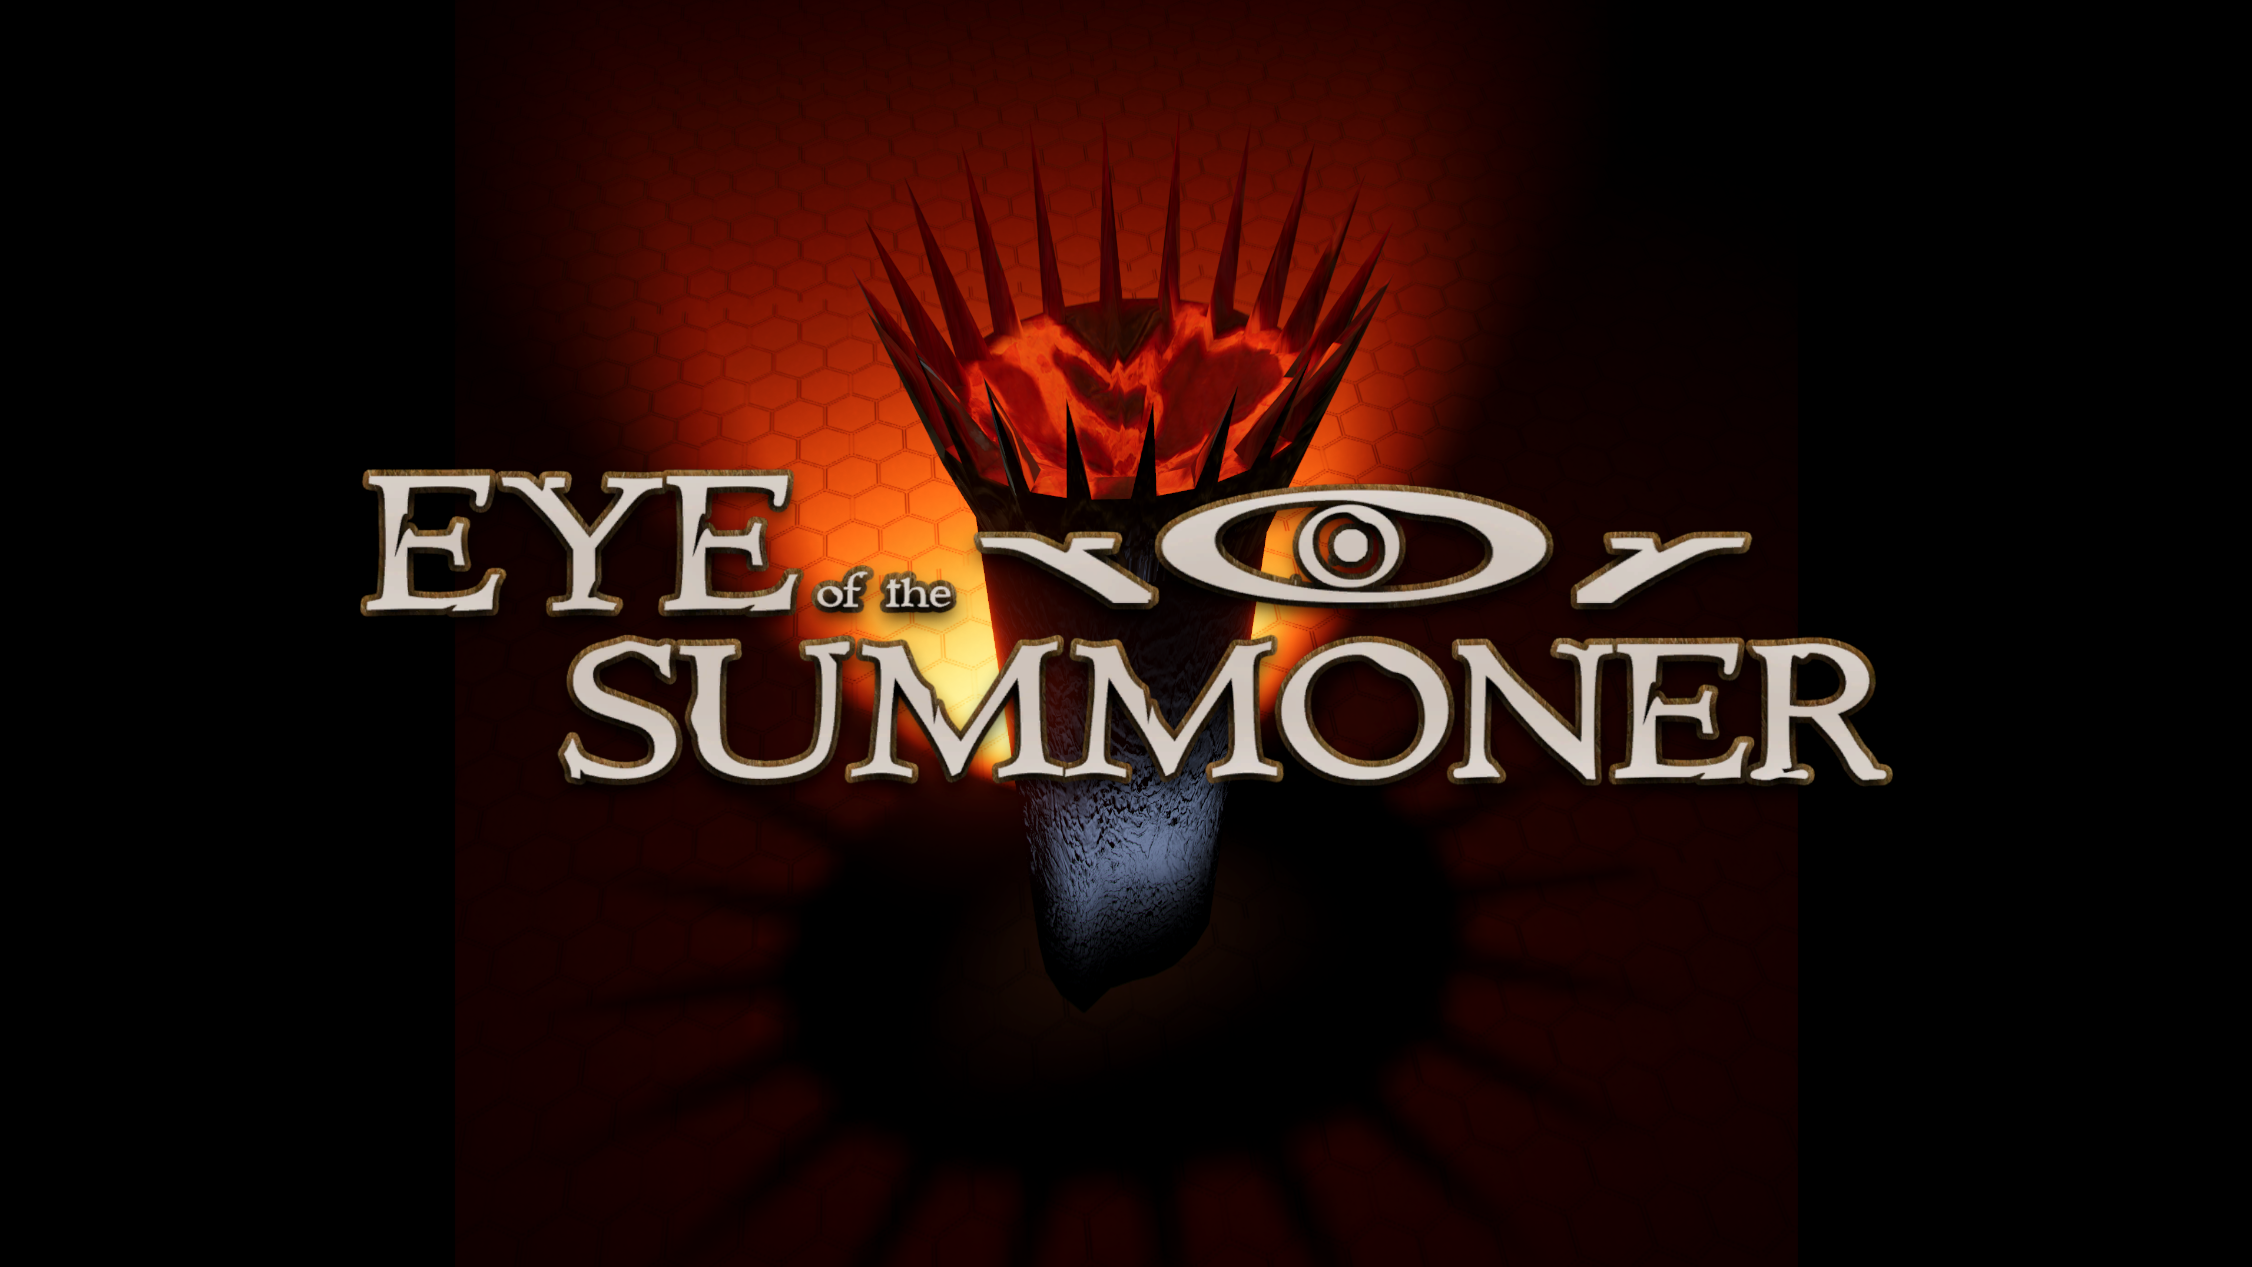 Eye of the Summoner